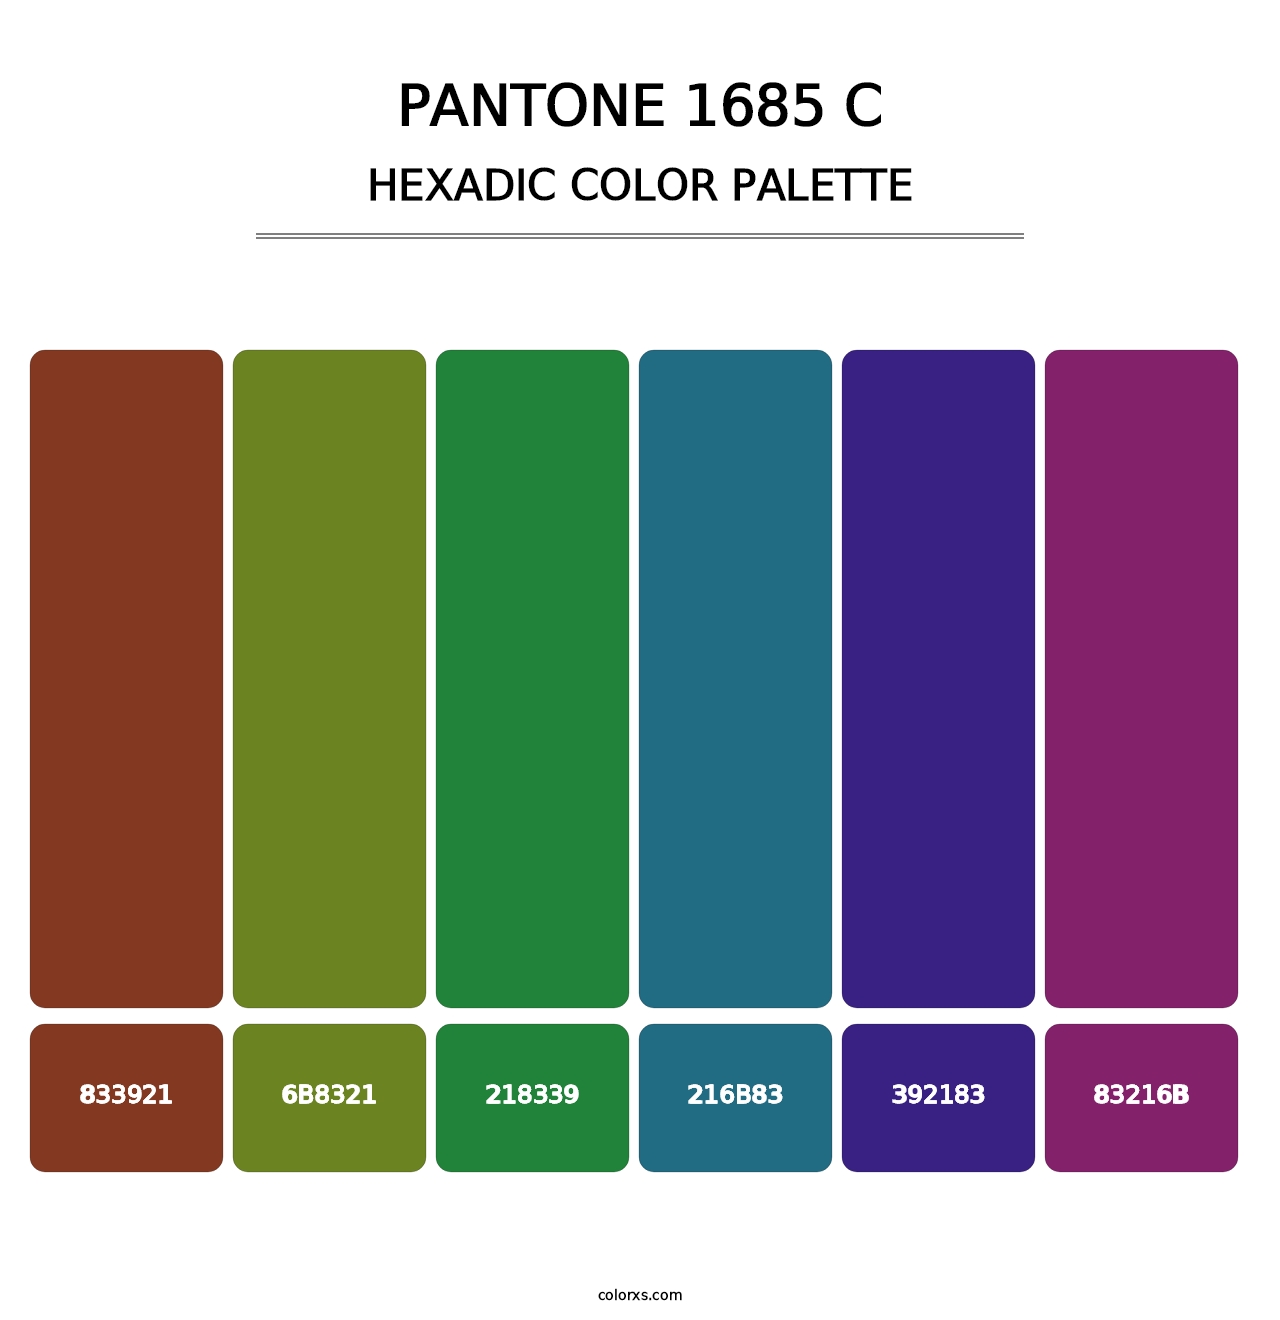 PANTONE 1685 C - Hexadic Color Palette